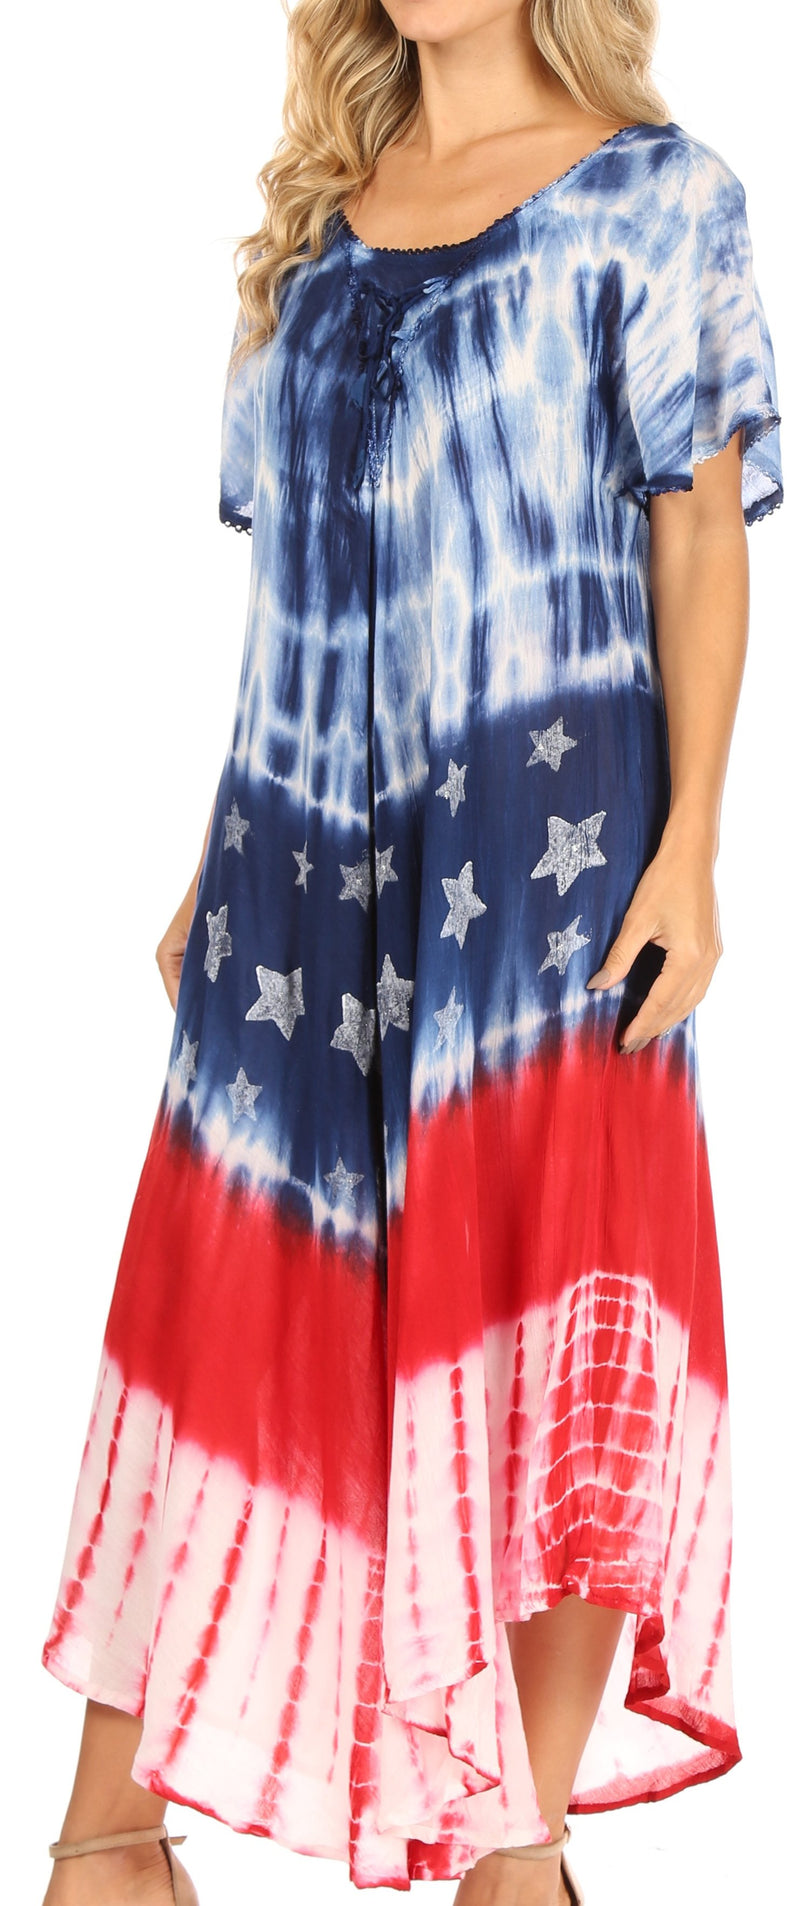 Sakkas Sara Women's Patriotic Flag Loose Summer Casual Dress Lightweight Print